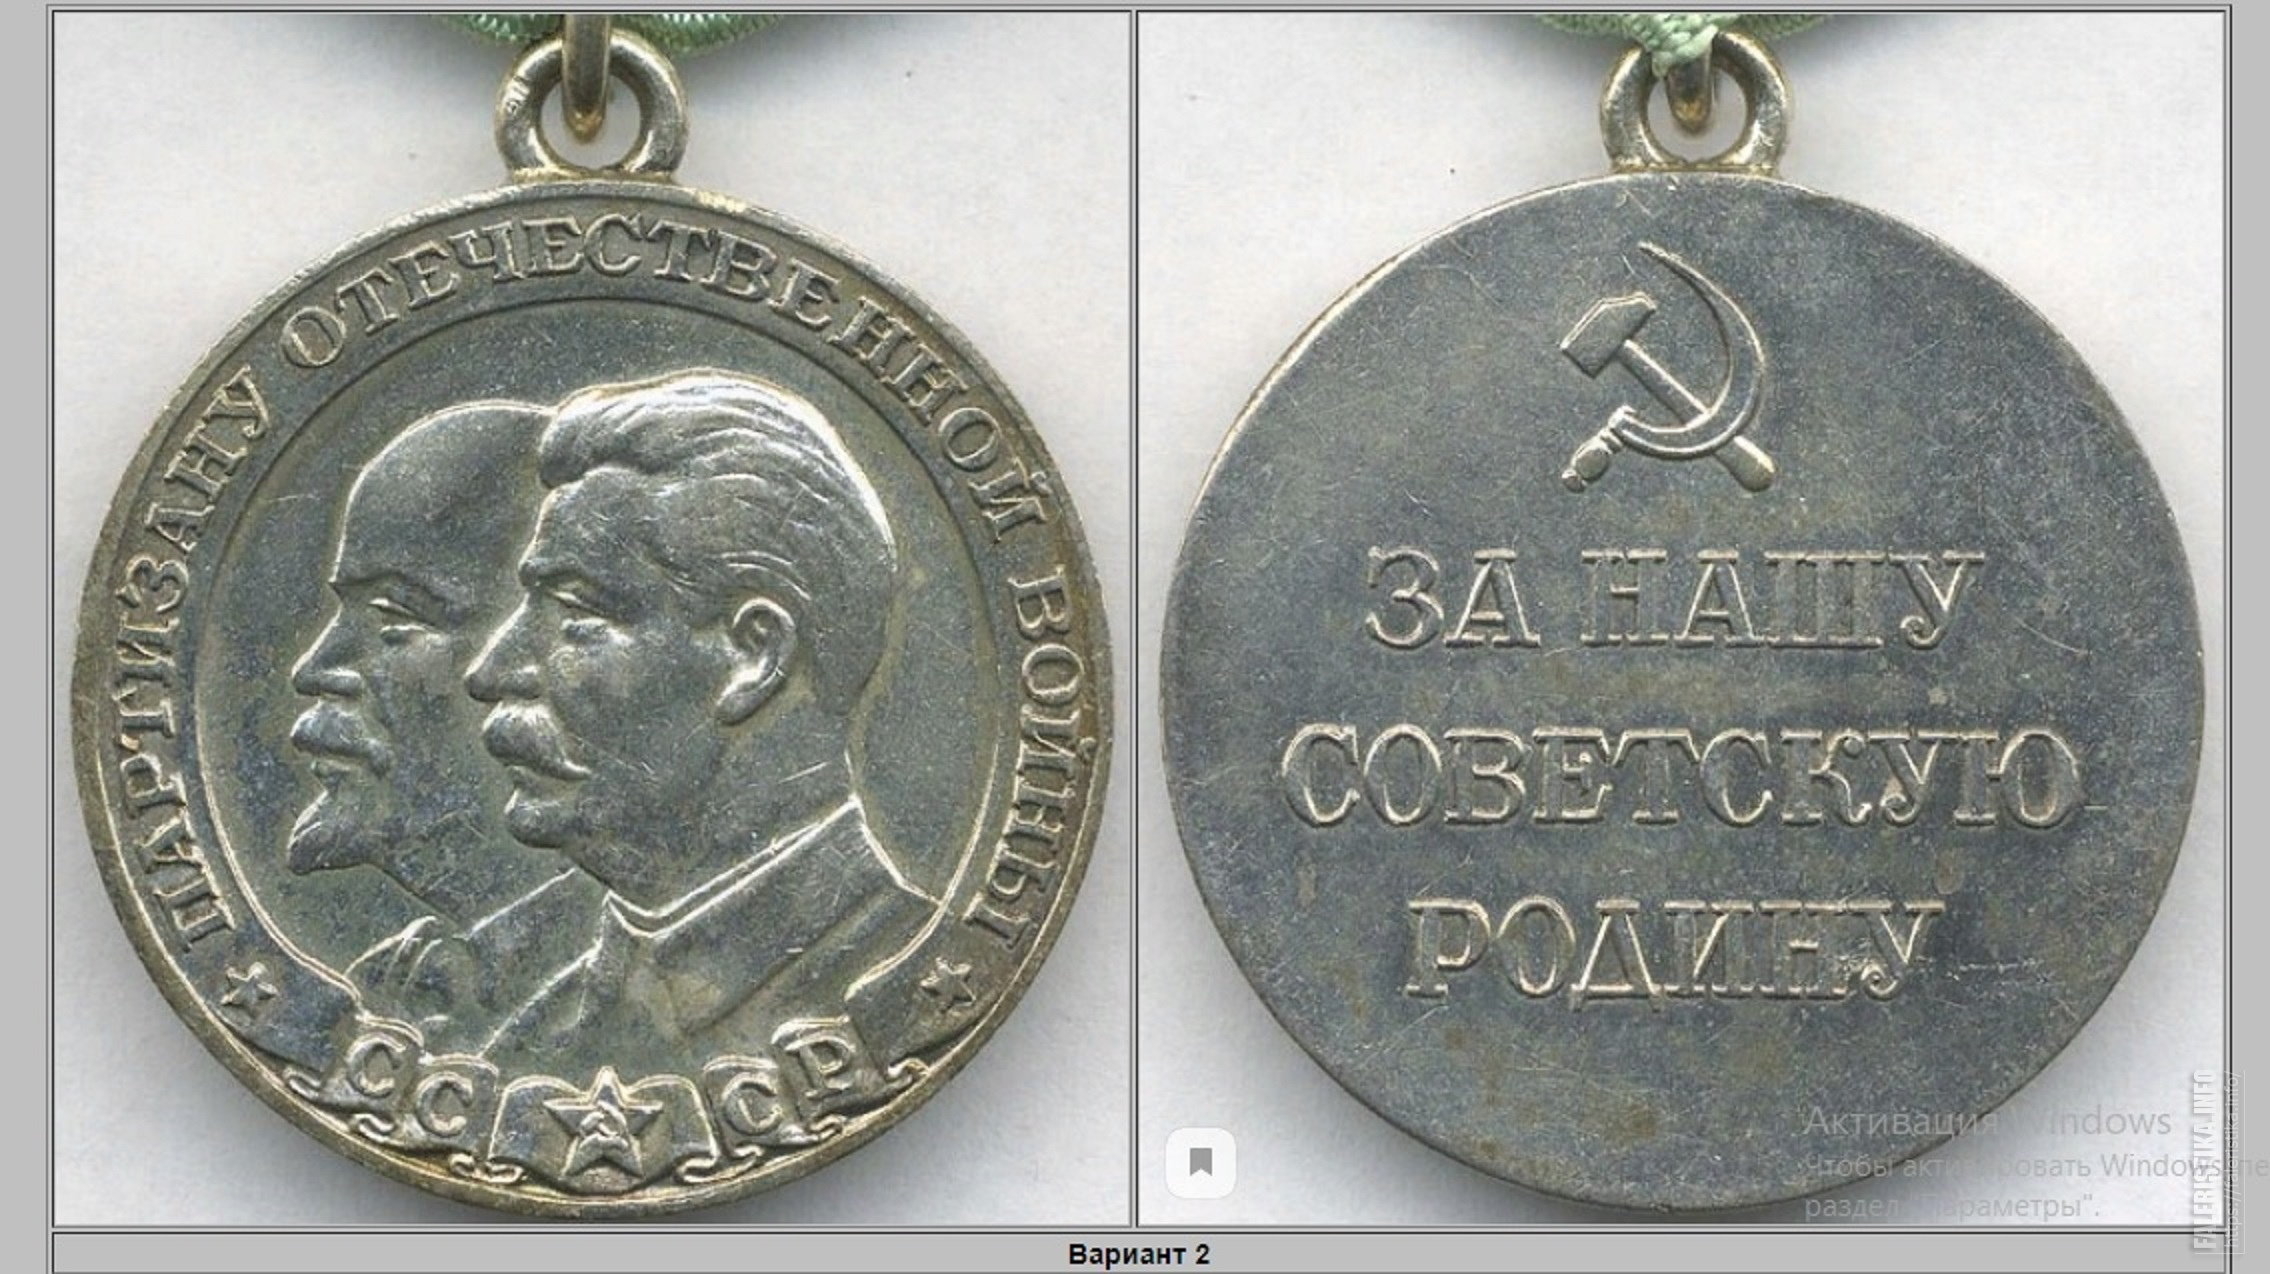 Мондвор ордена и медали СССР